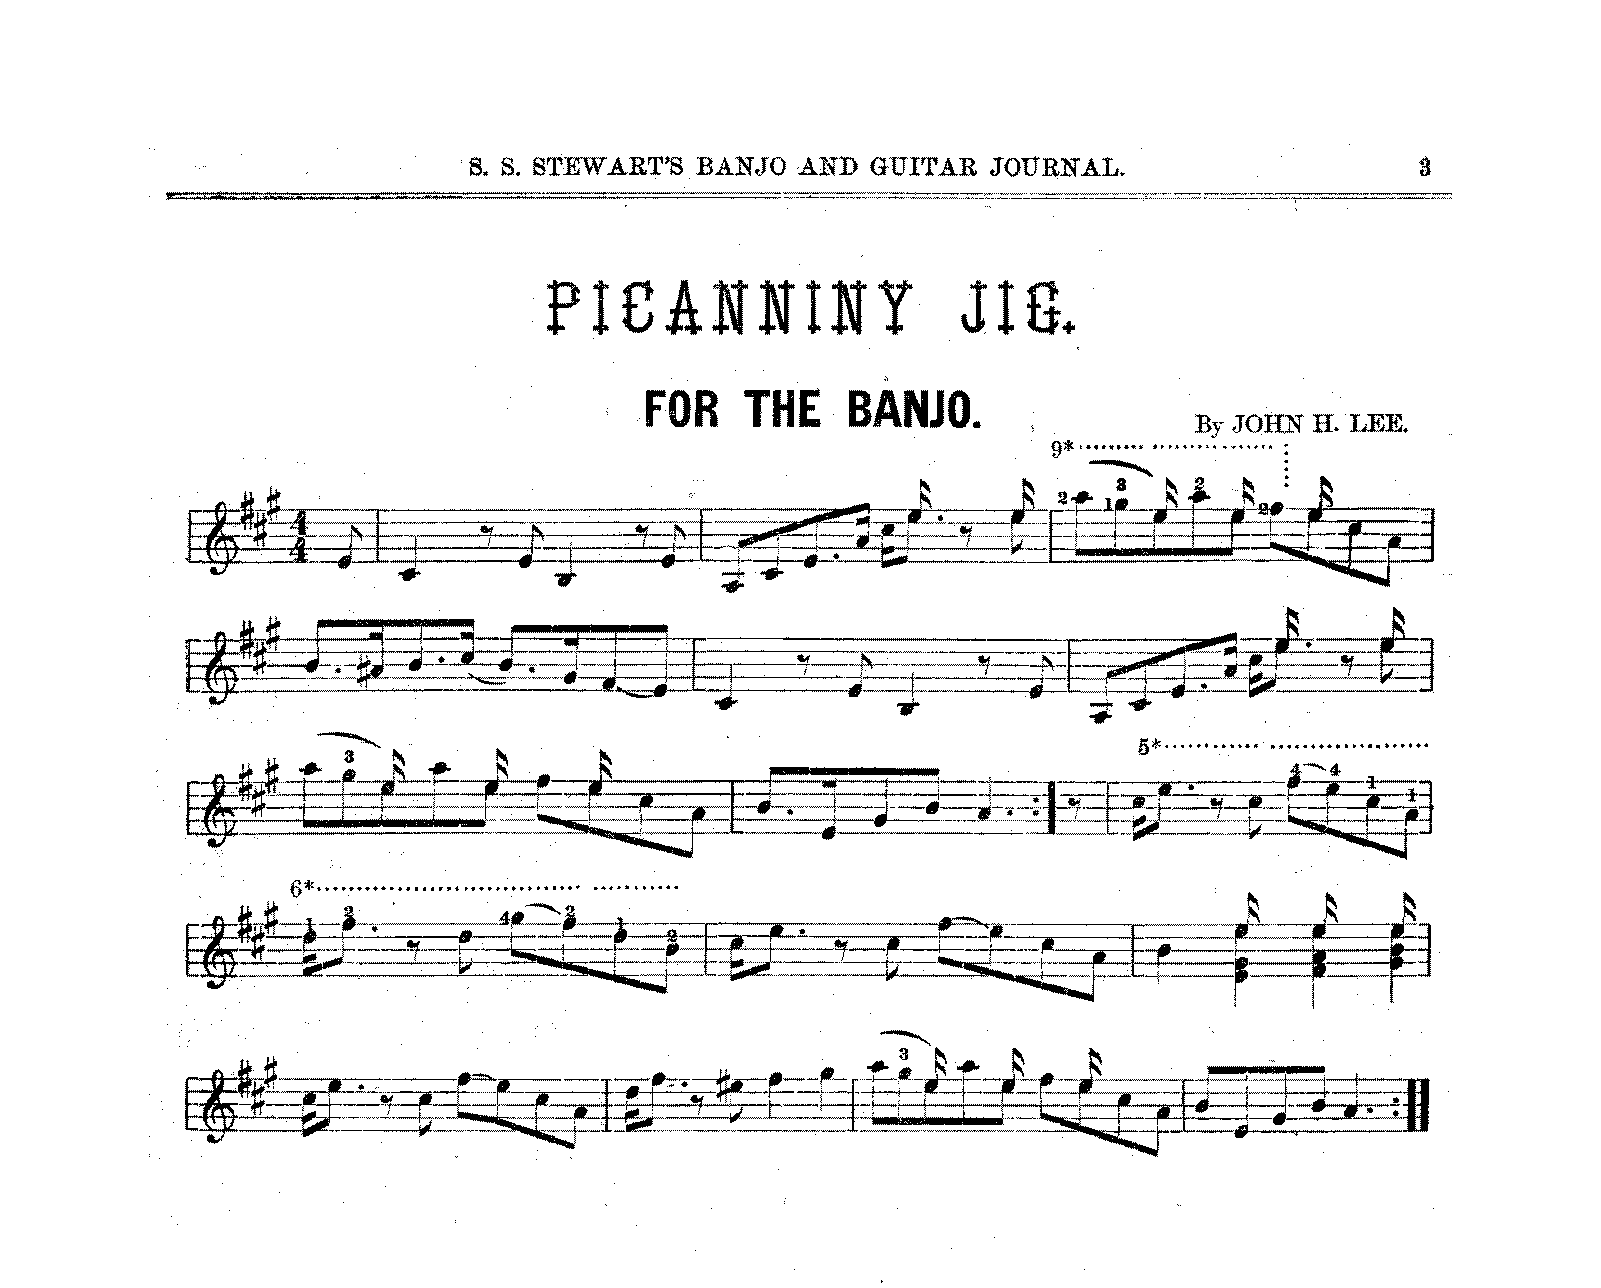 Picanniny Jig (Lee, John H.) - IMSLP: Free Sheet Music PDF Download